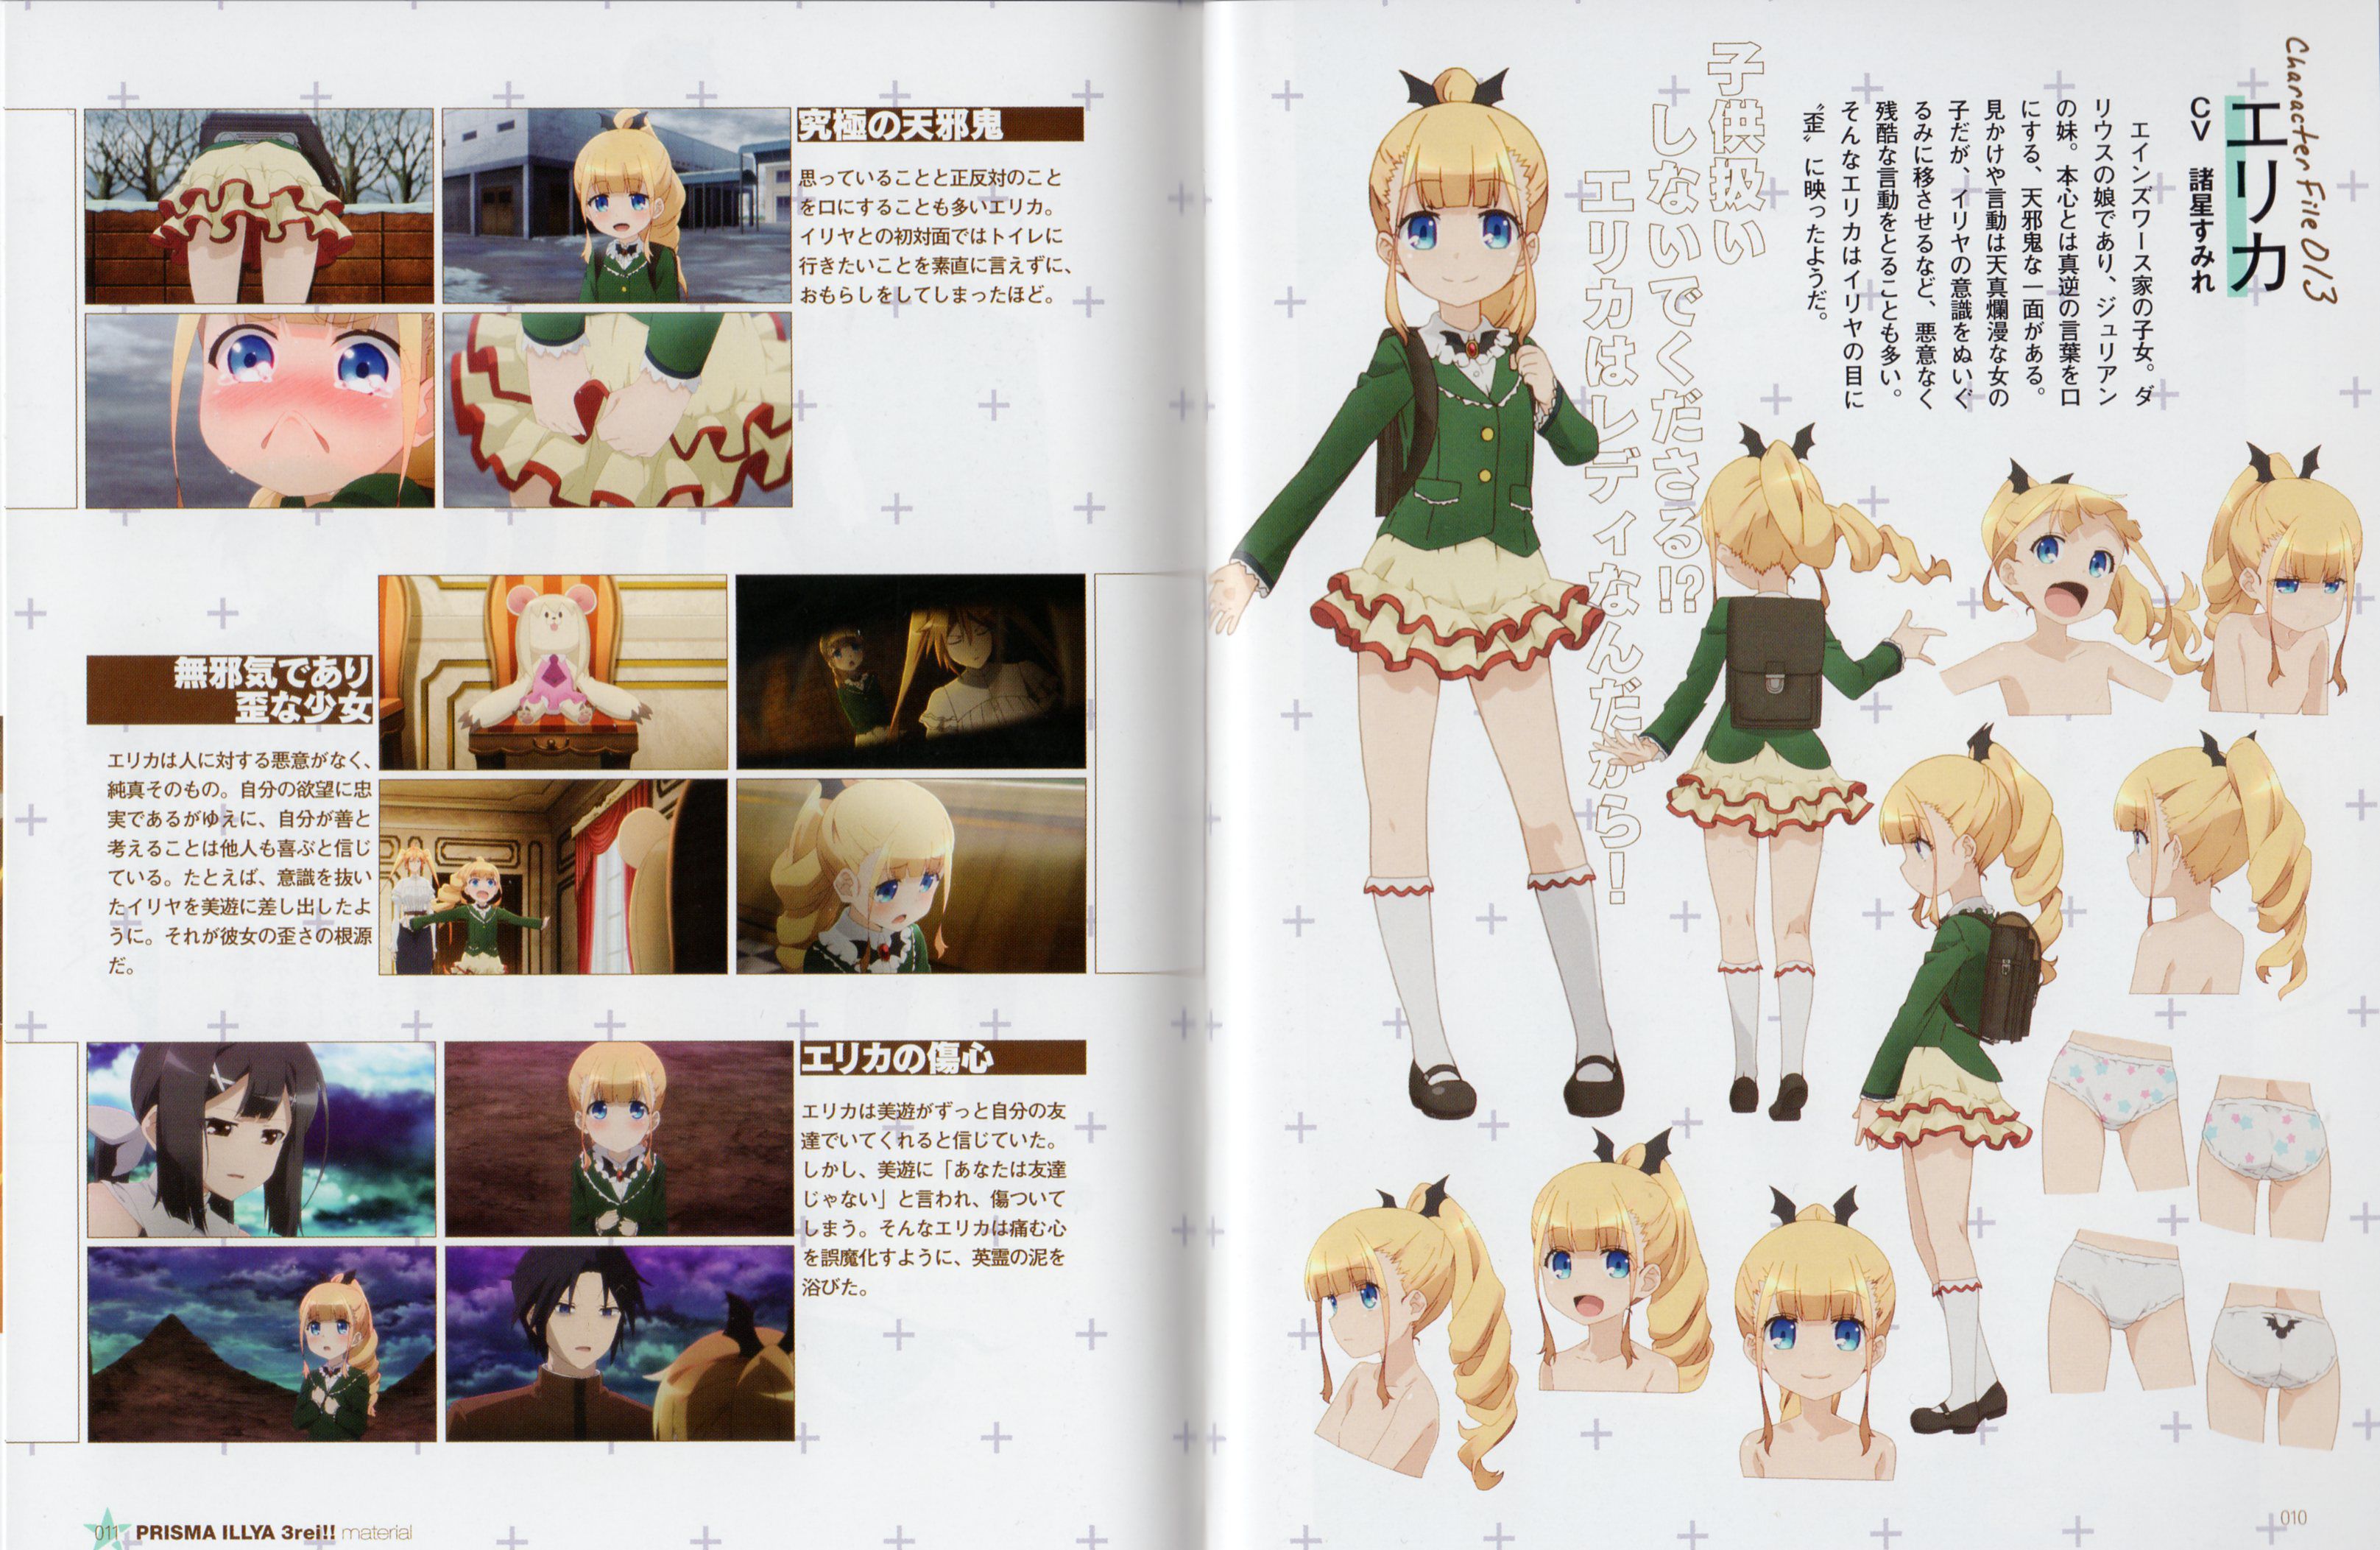 Fate/kaleid liner Prisma ☆ Ilya dry! BD vol. 5 "award animation Nightgown of Erica! reveal a kinky night dolls of sleeping! 」 119